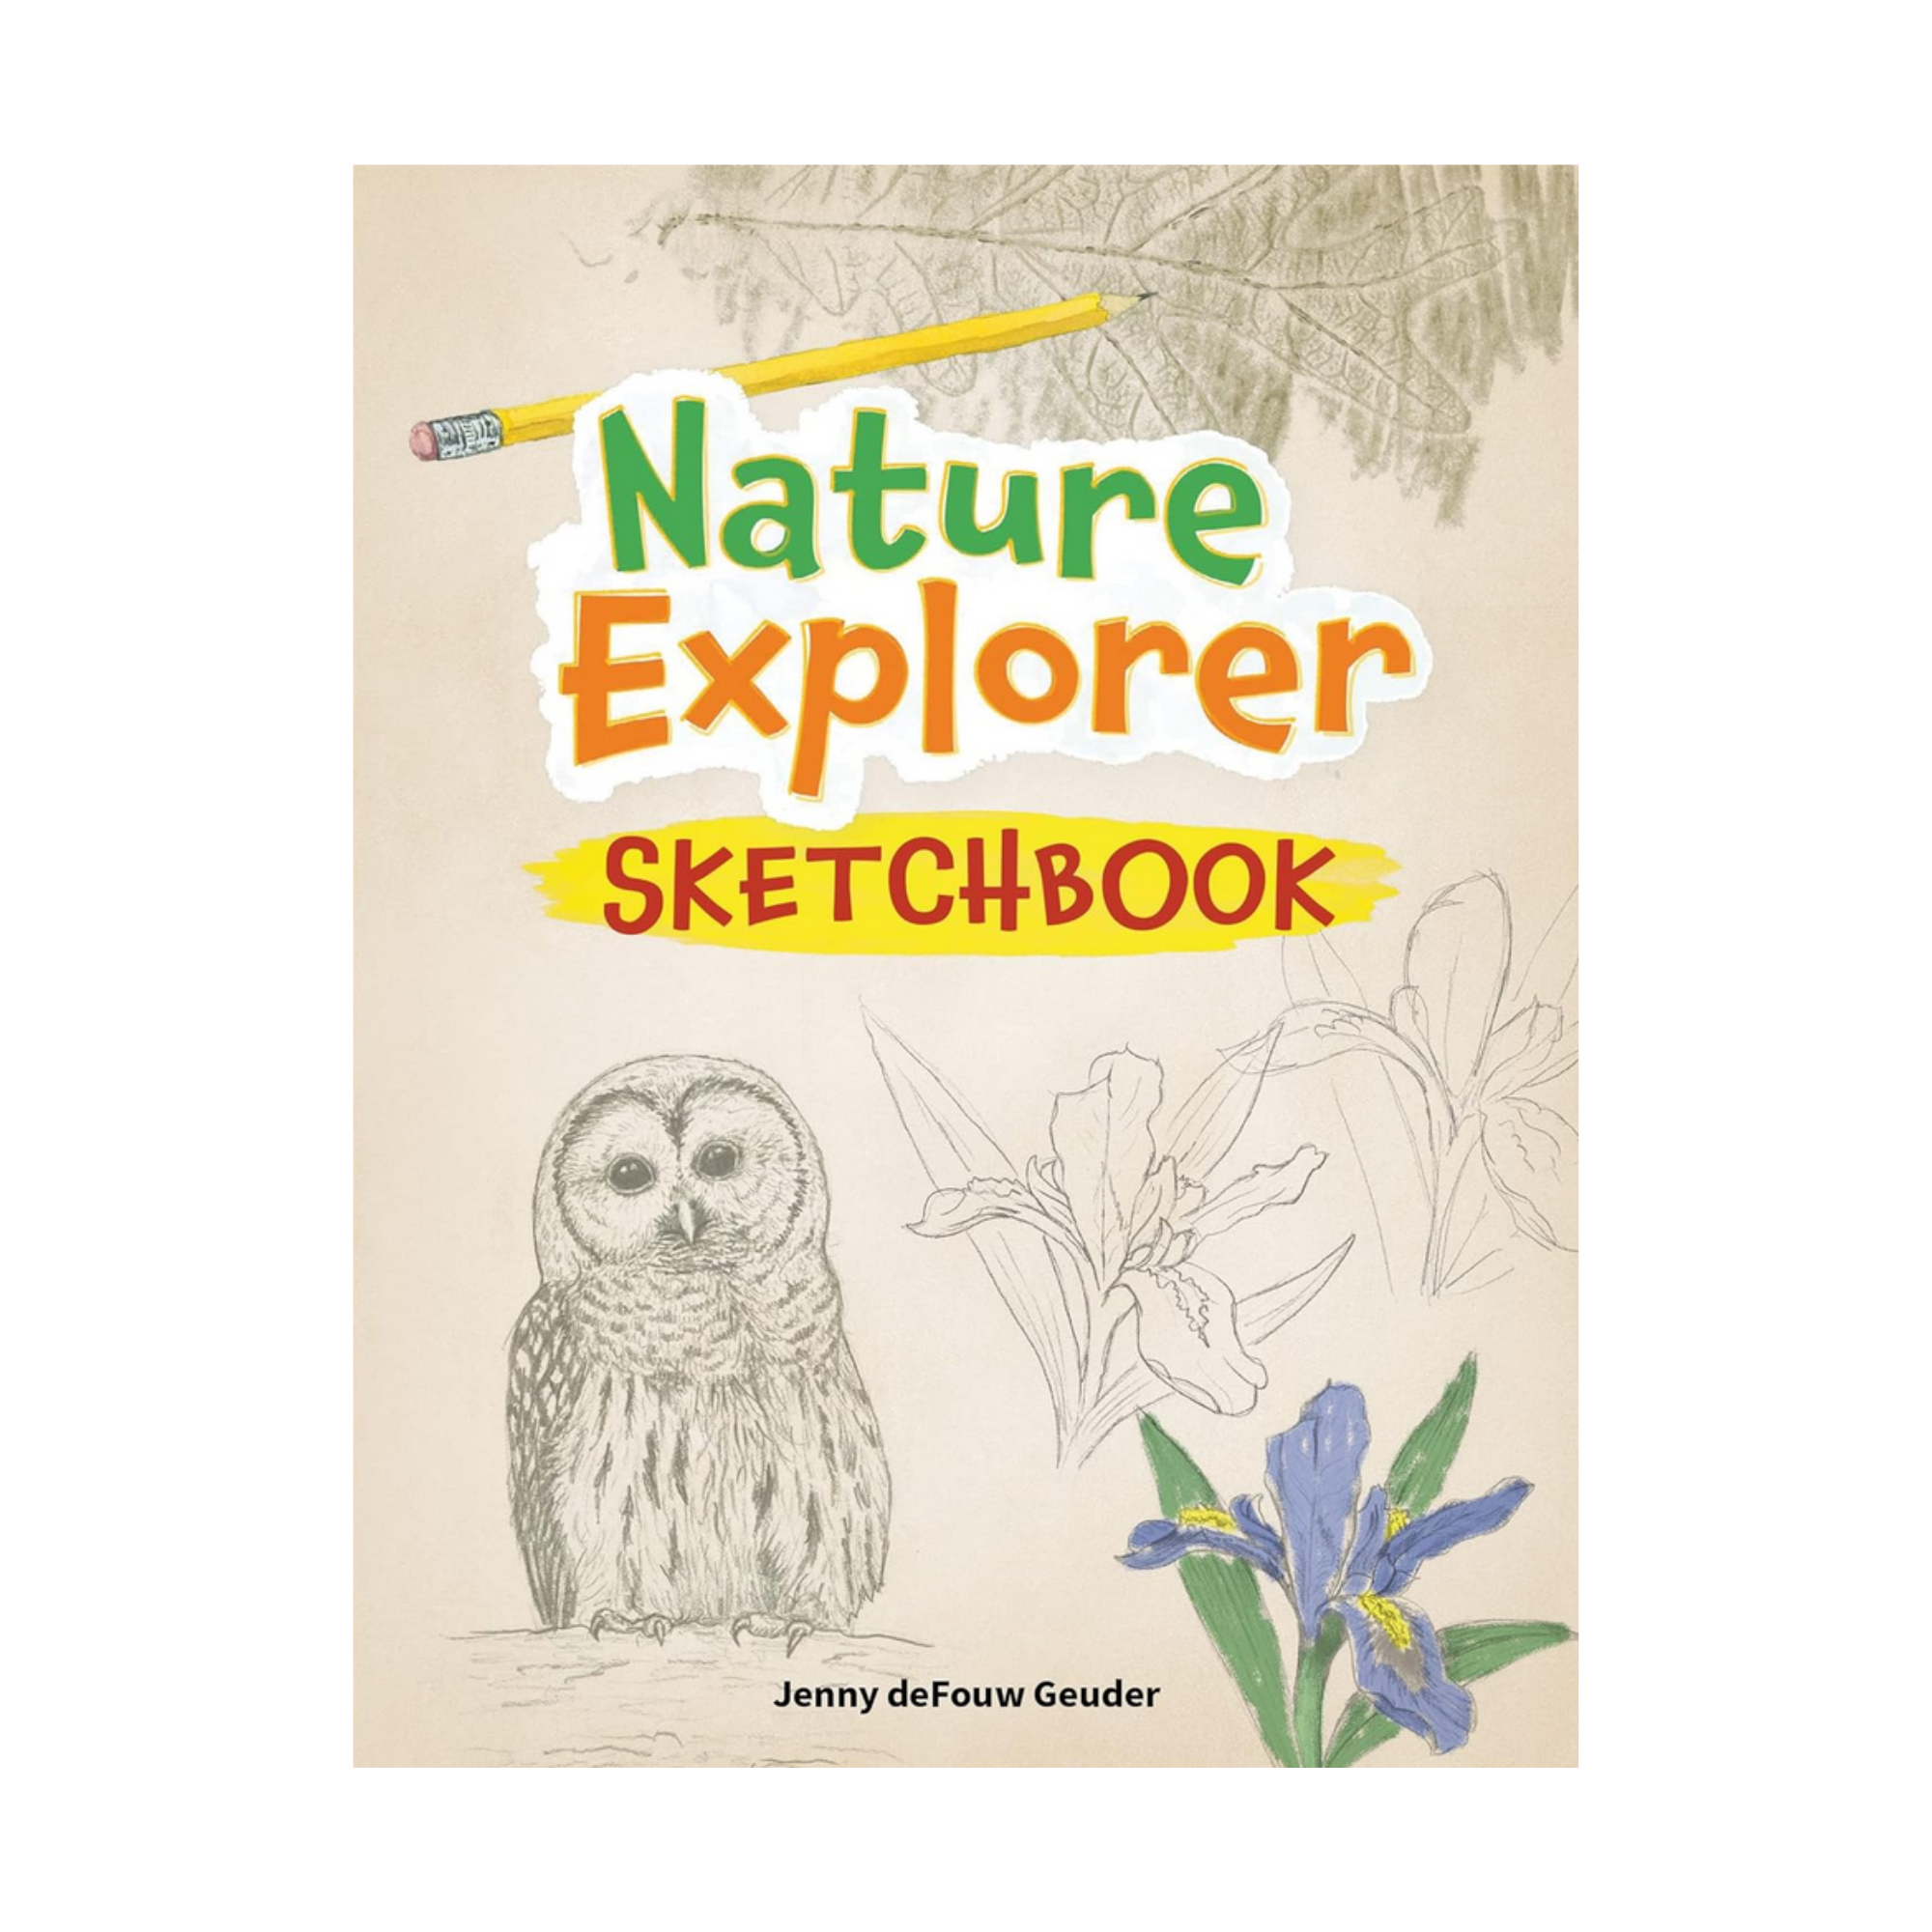 Nature Explorer sketchbook